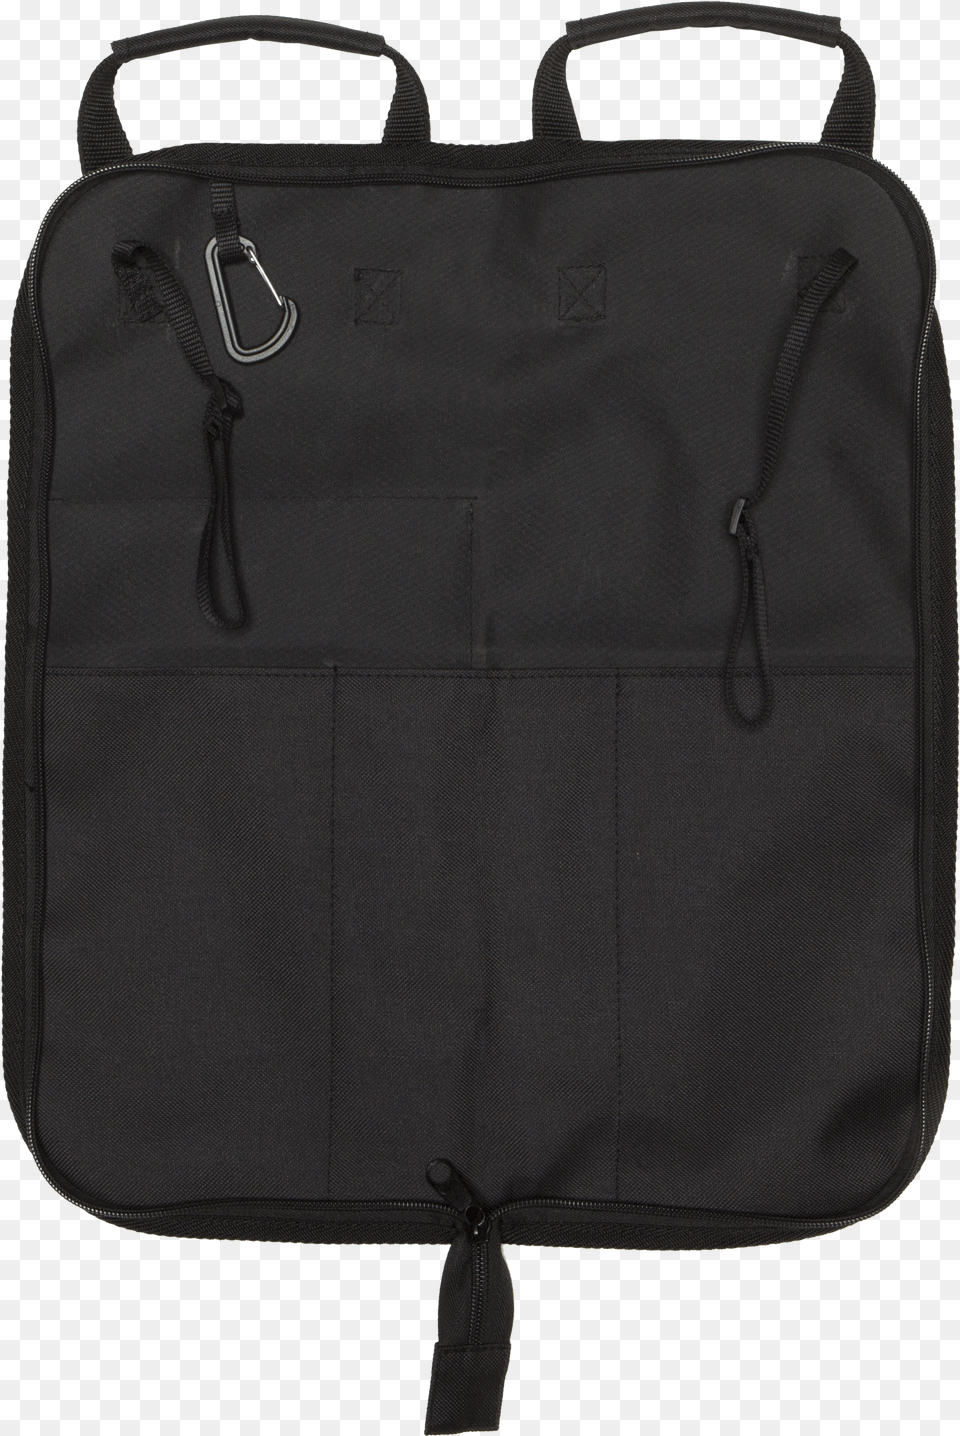 Add To Cart Zildjian Stick Bag, Accessories, Handbag, Briefcase, Tote Bag Free Png Download